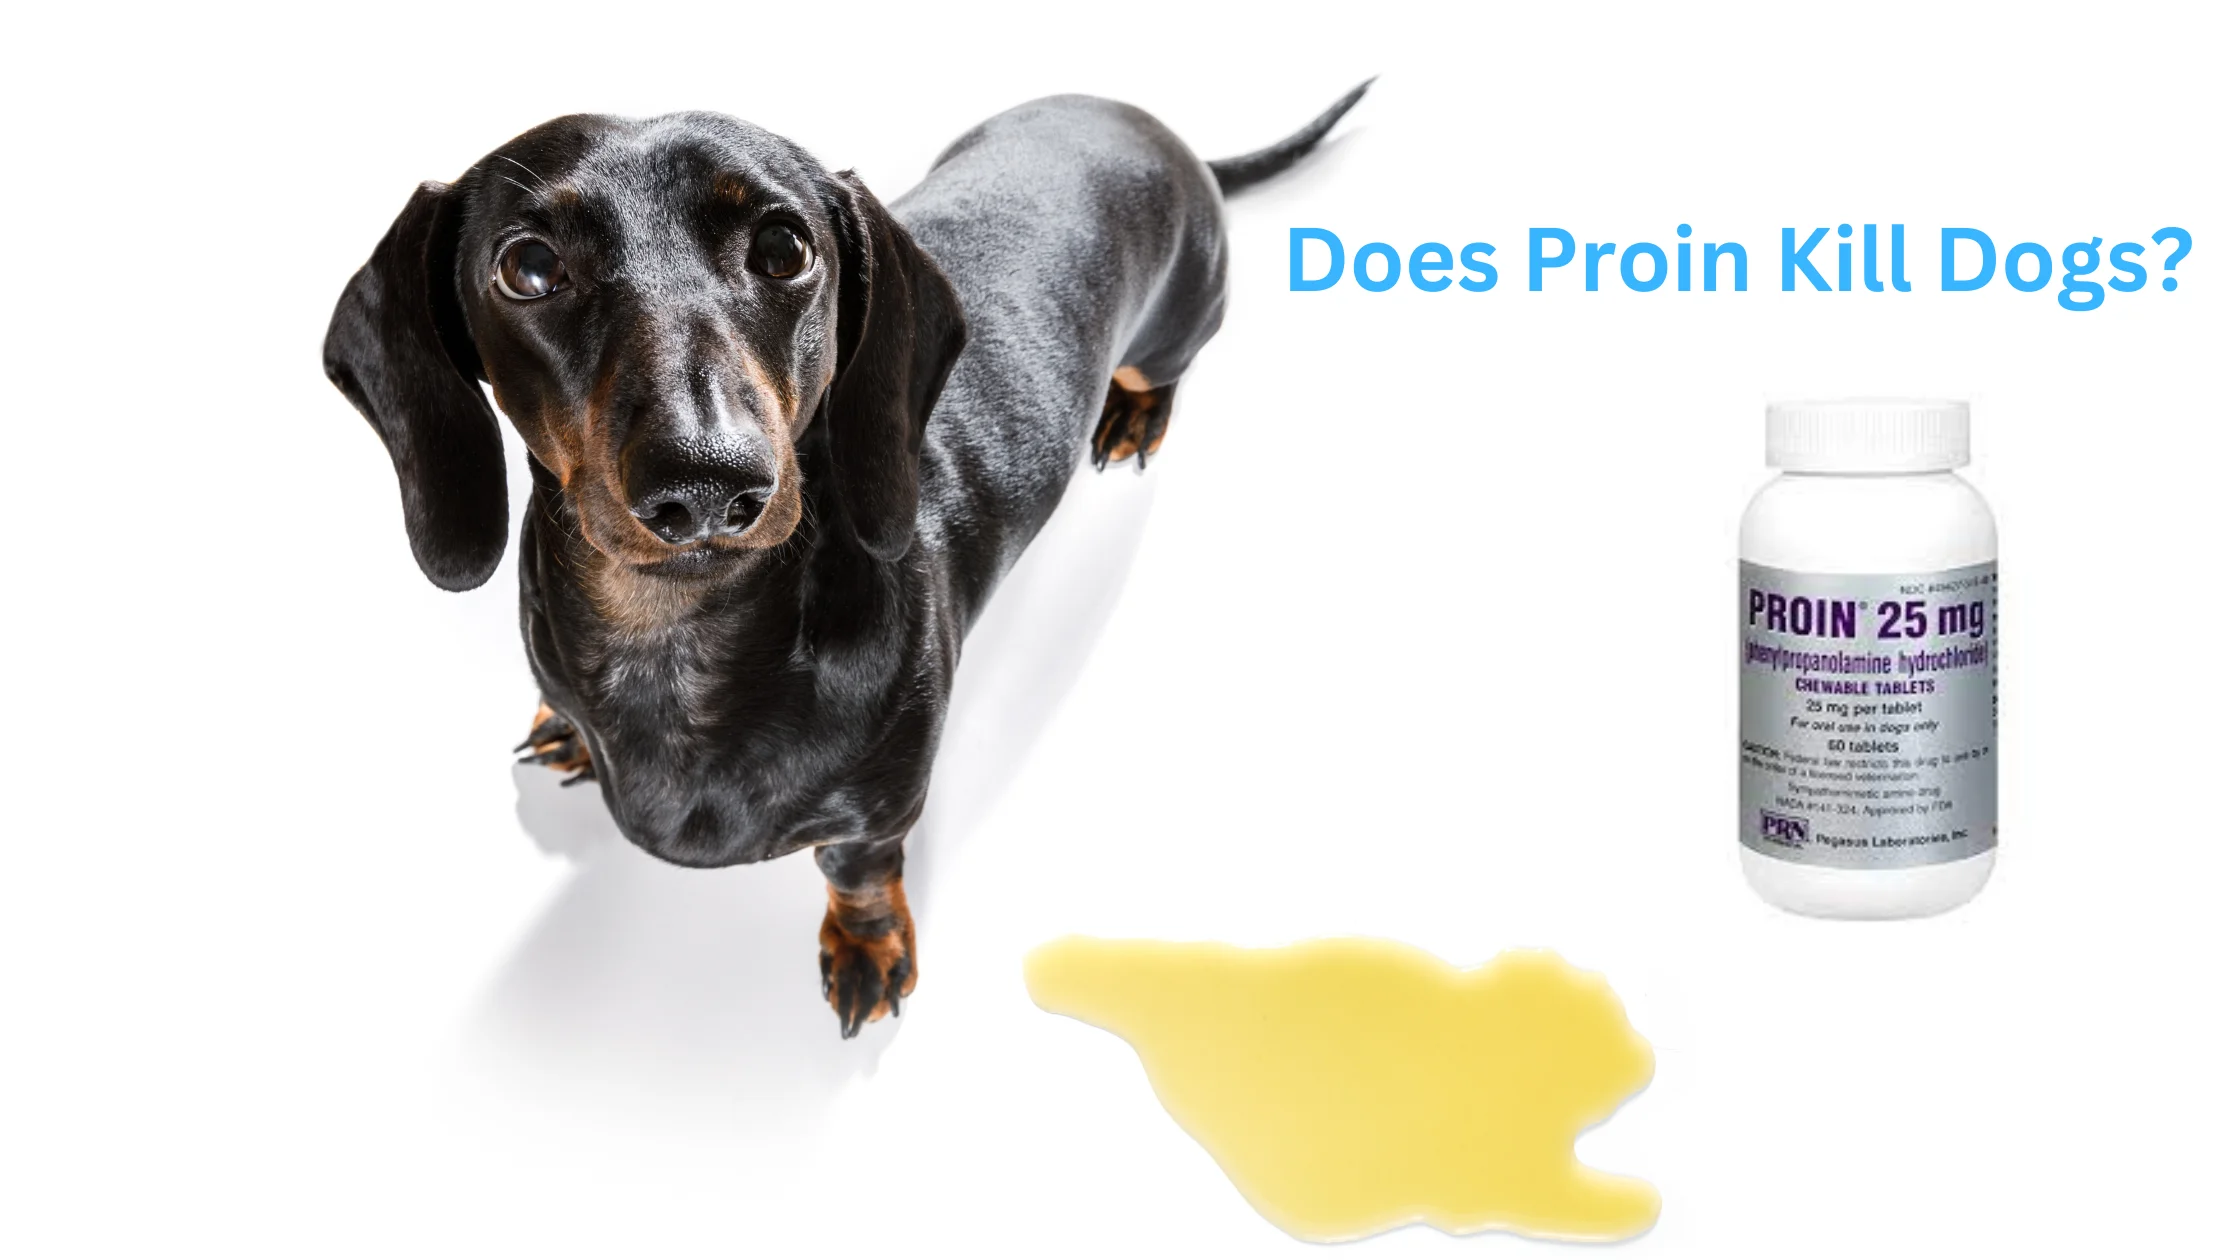 Does Proin Kill Dogs?